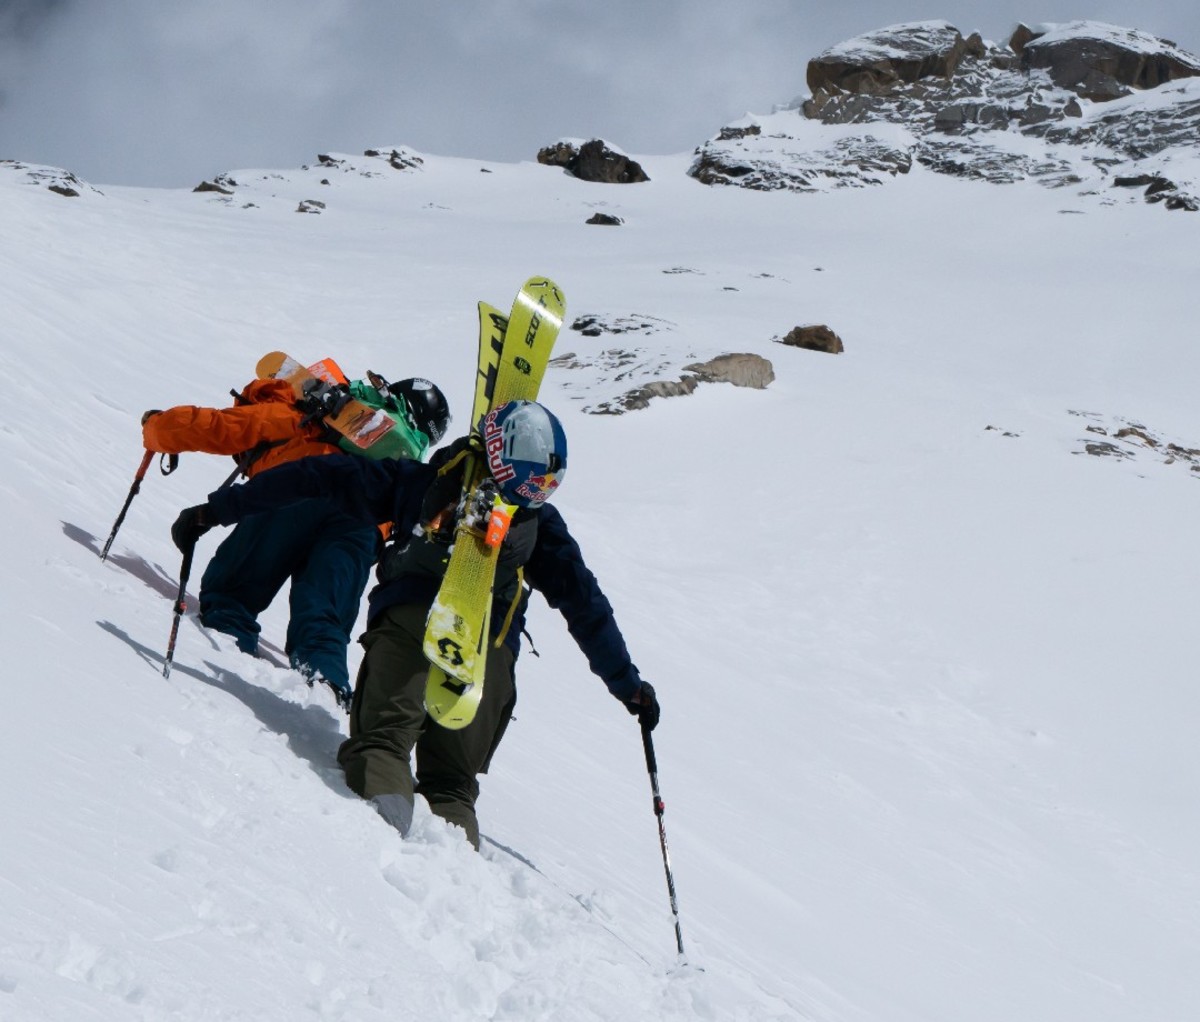 Freeskiers Sam Anthamatten and Jeremie Heitz climbing up a peak in deep snow